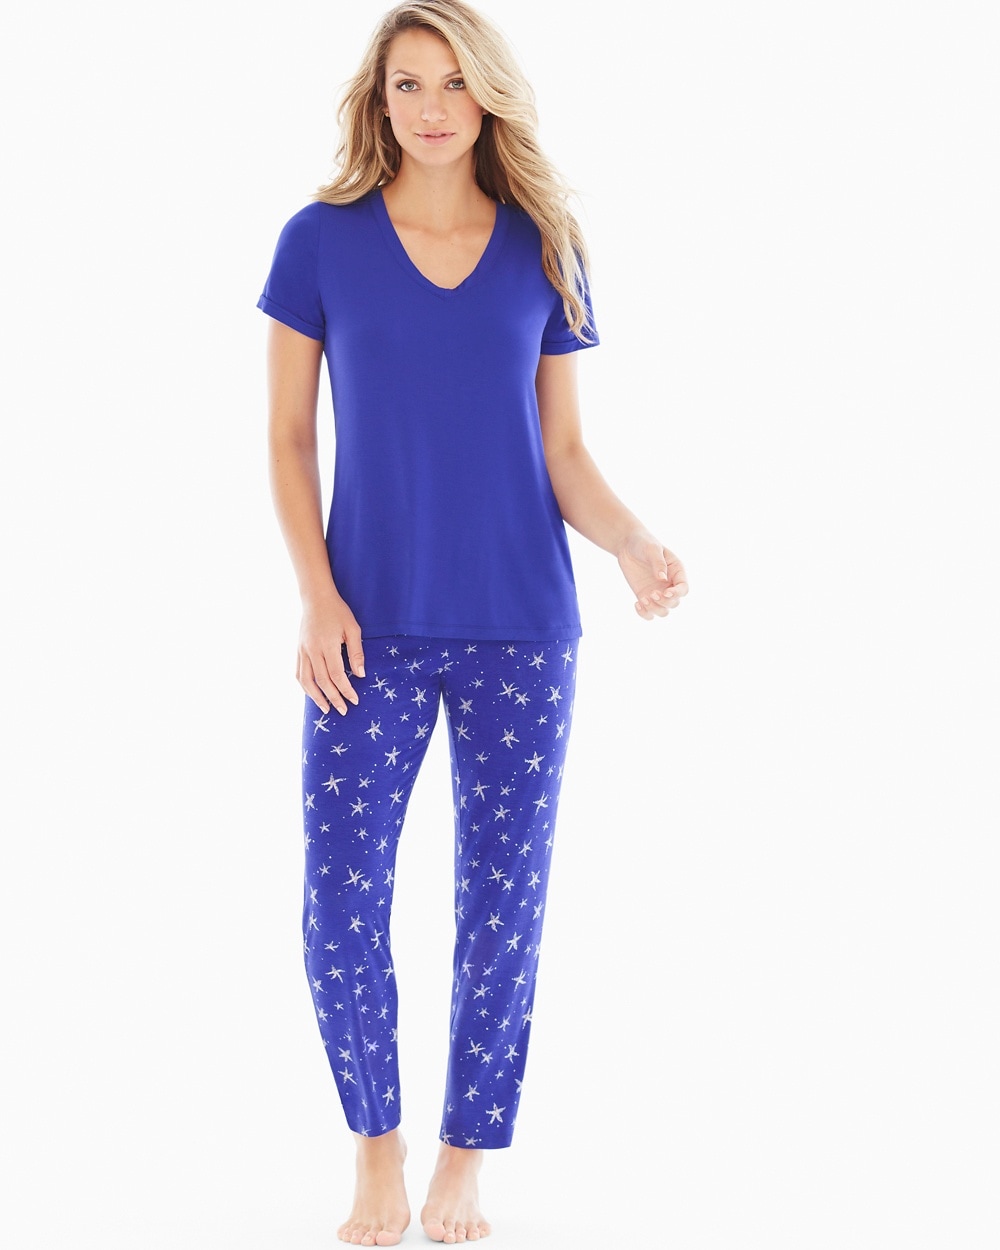 Cool Nights Ankle Pants Pajama Set Starfish Royal Blue